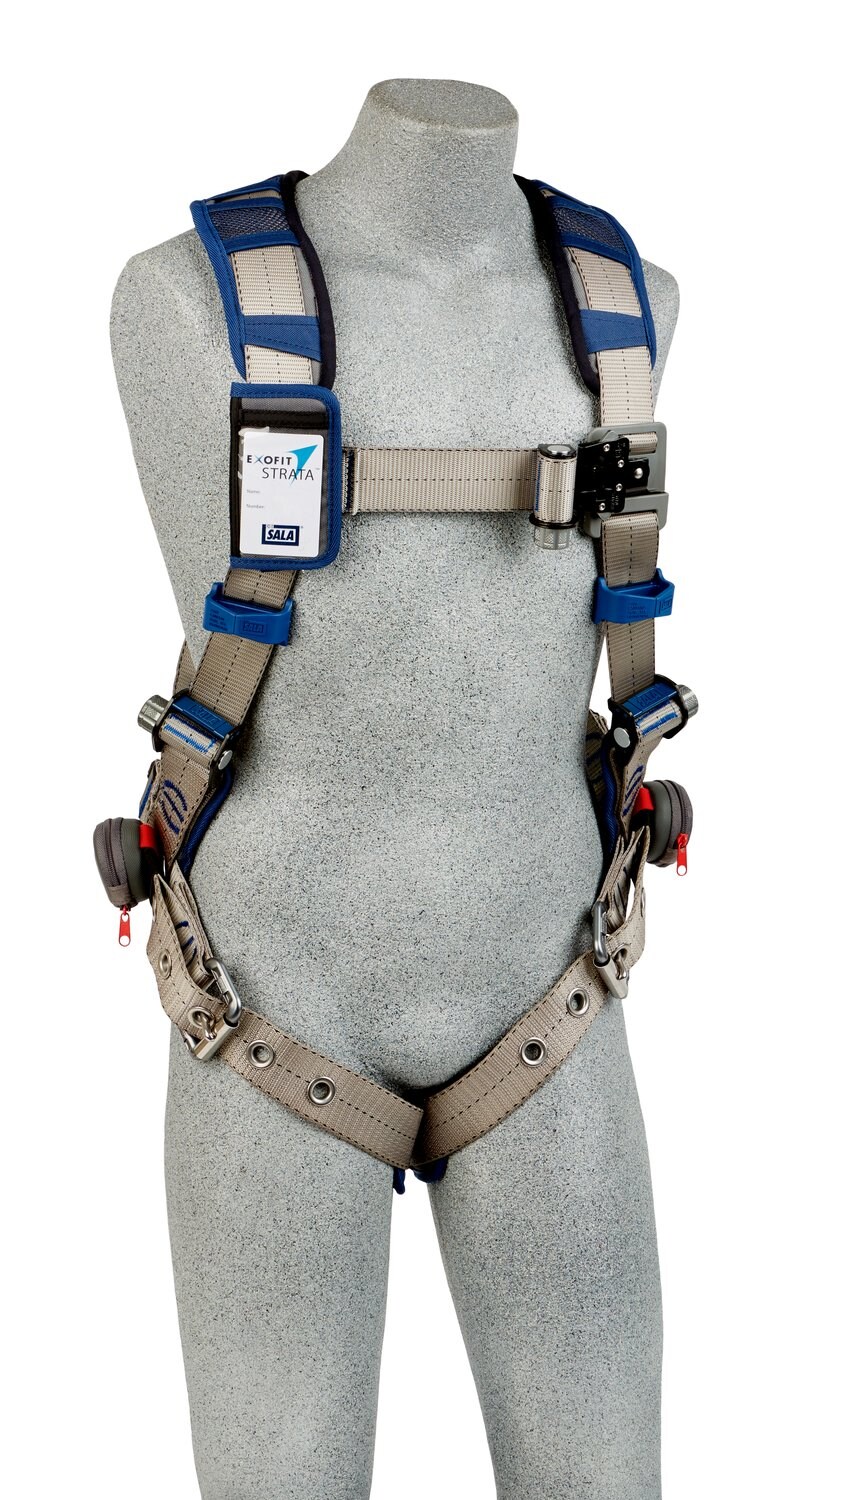 7012815975 - 3M DBI-SALA ExoFit STRATA Comfort Vest Safety Harness 1112516, Medium